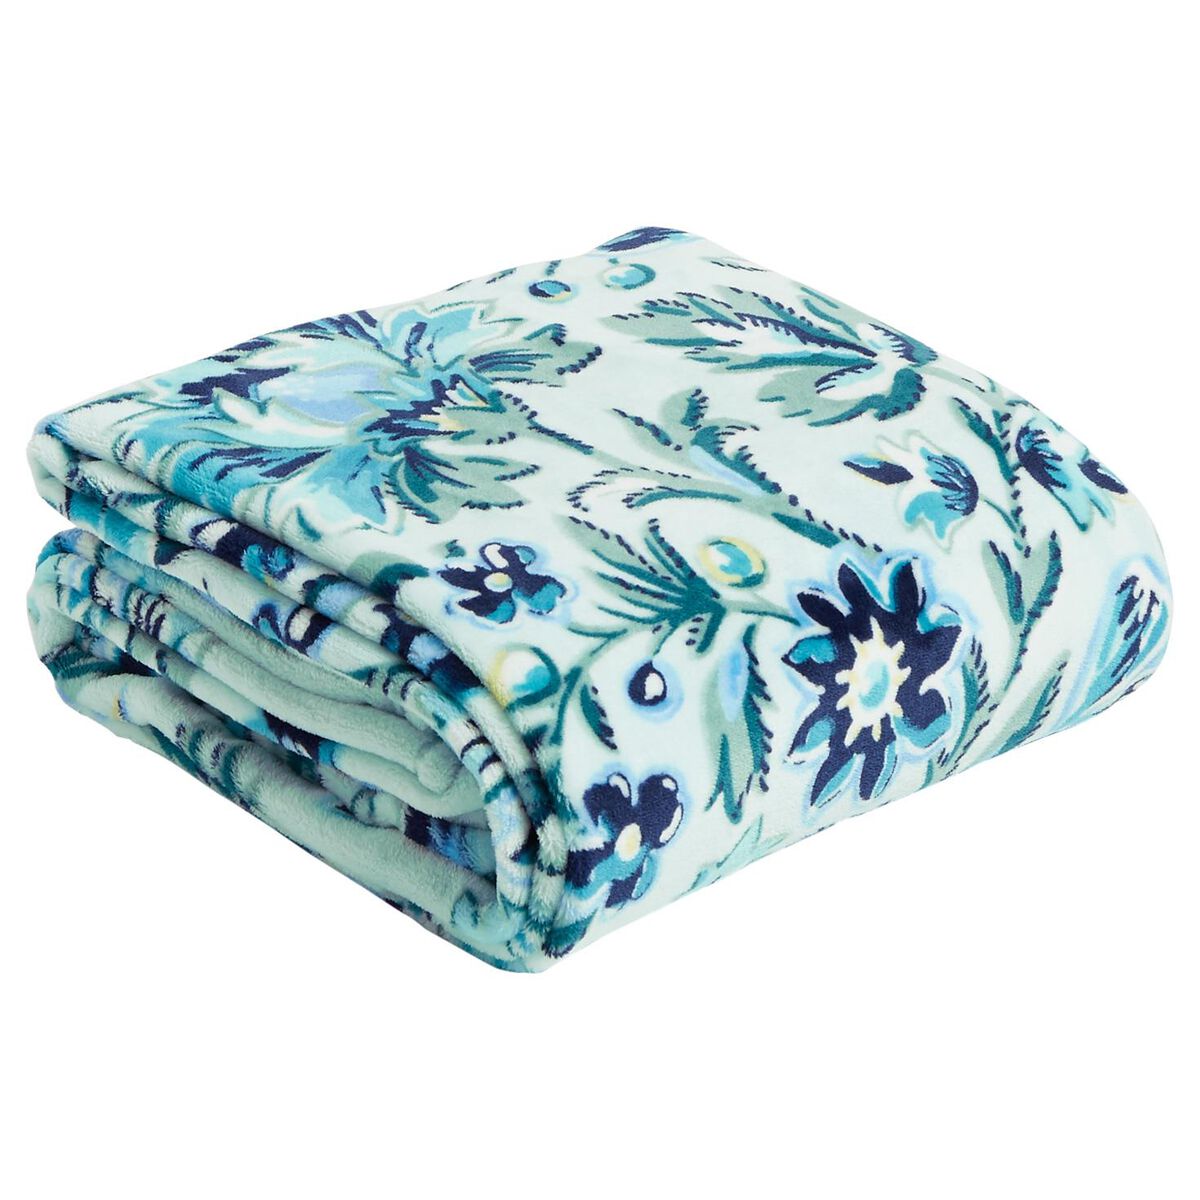 Vera Bradley Throw Blanket in Cloud Vine, 50x80 - Pillows & Blankets ...